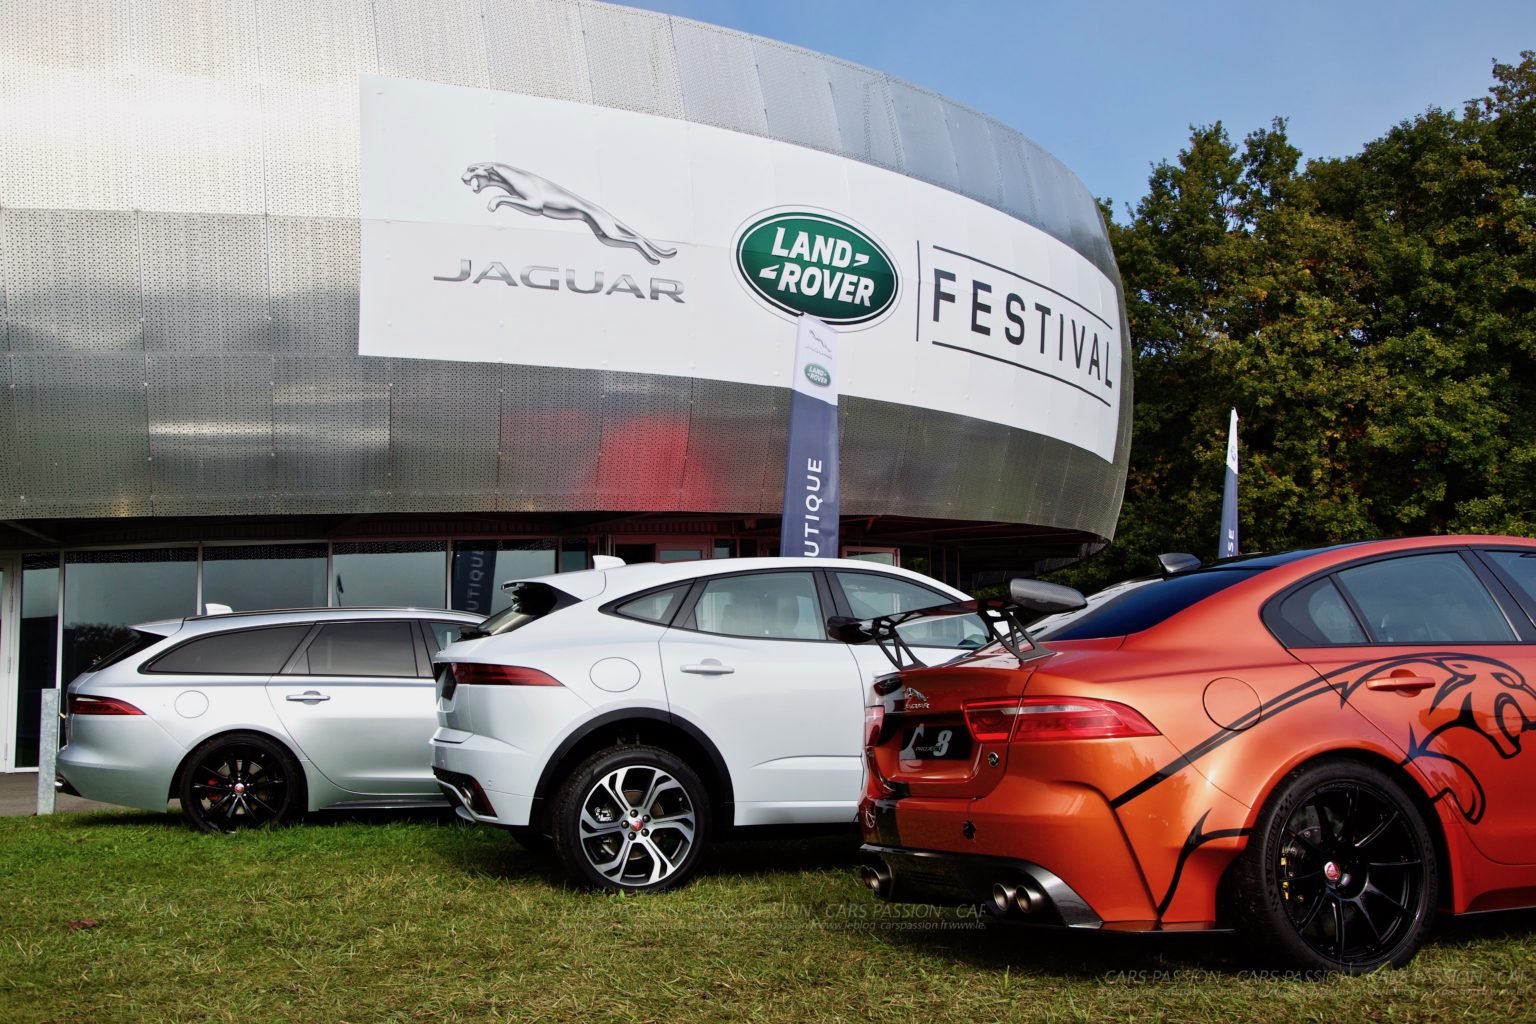 Jaguar Land Rover Festival